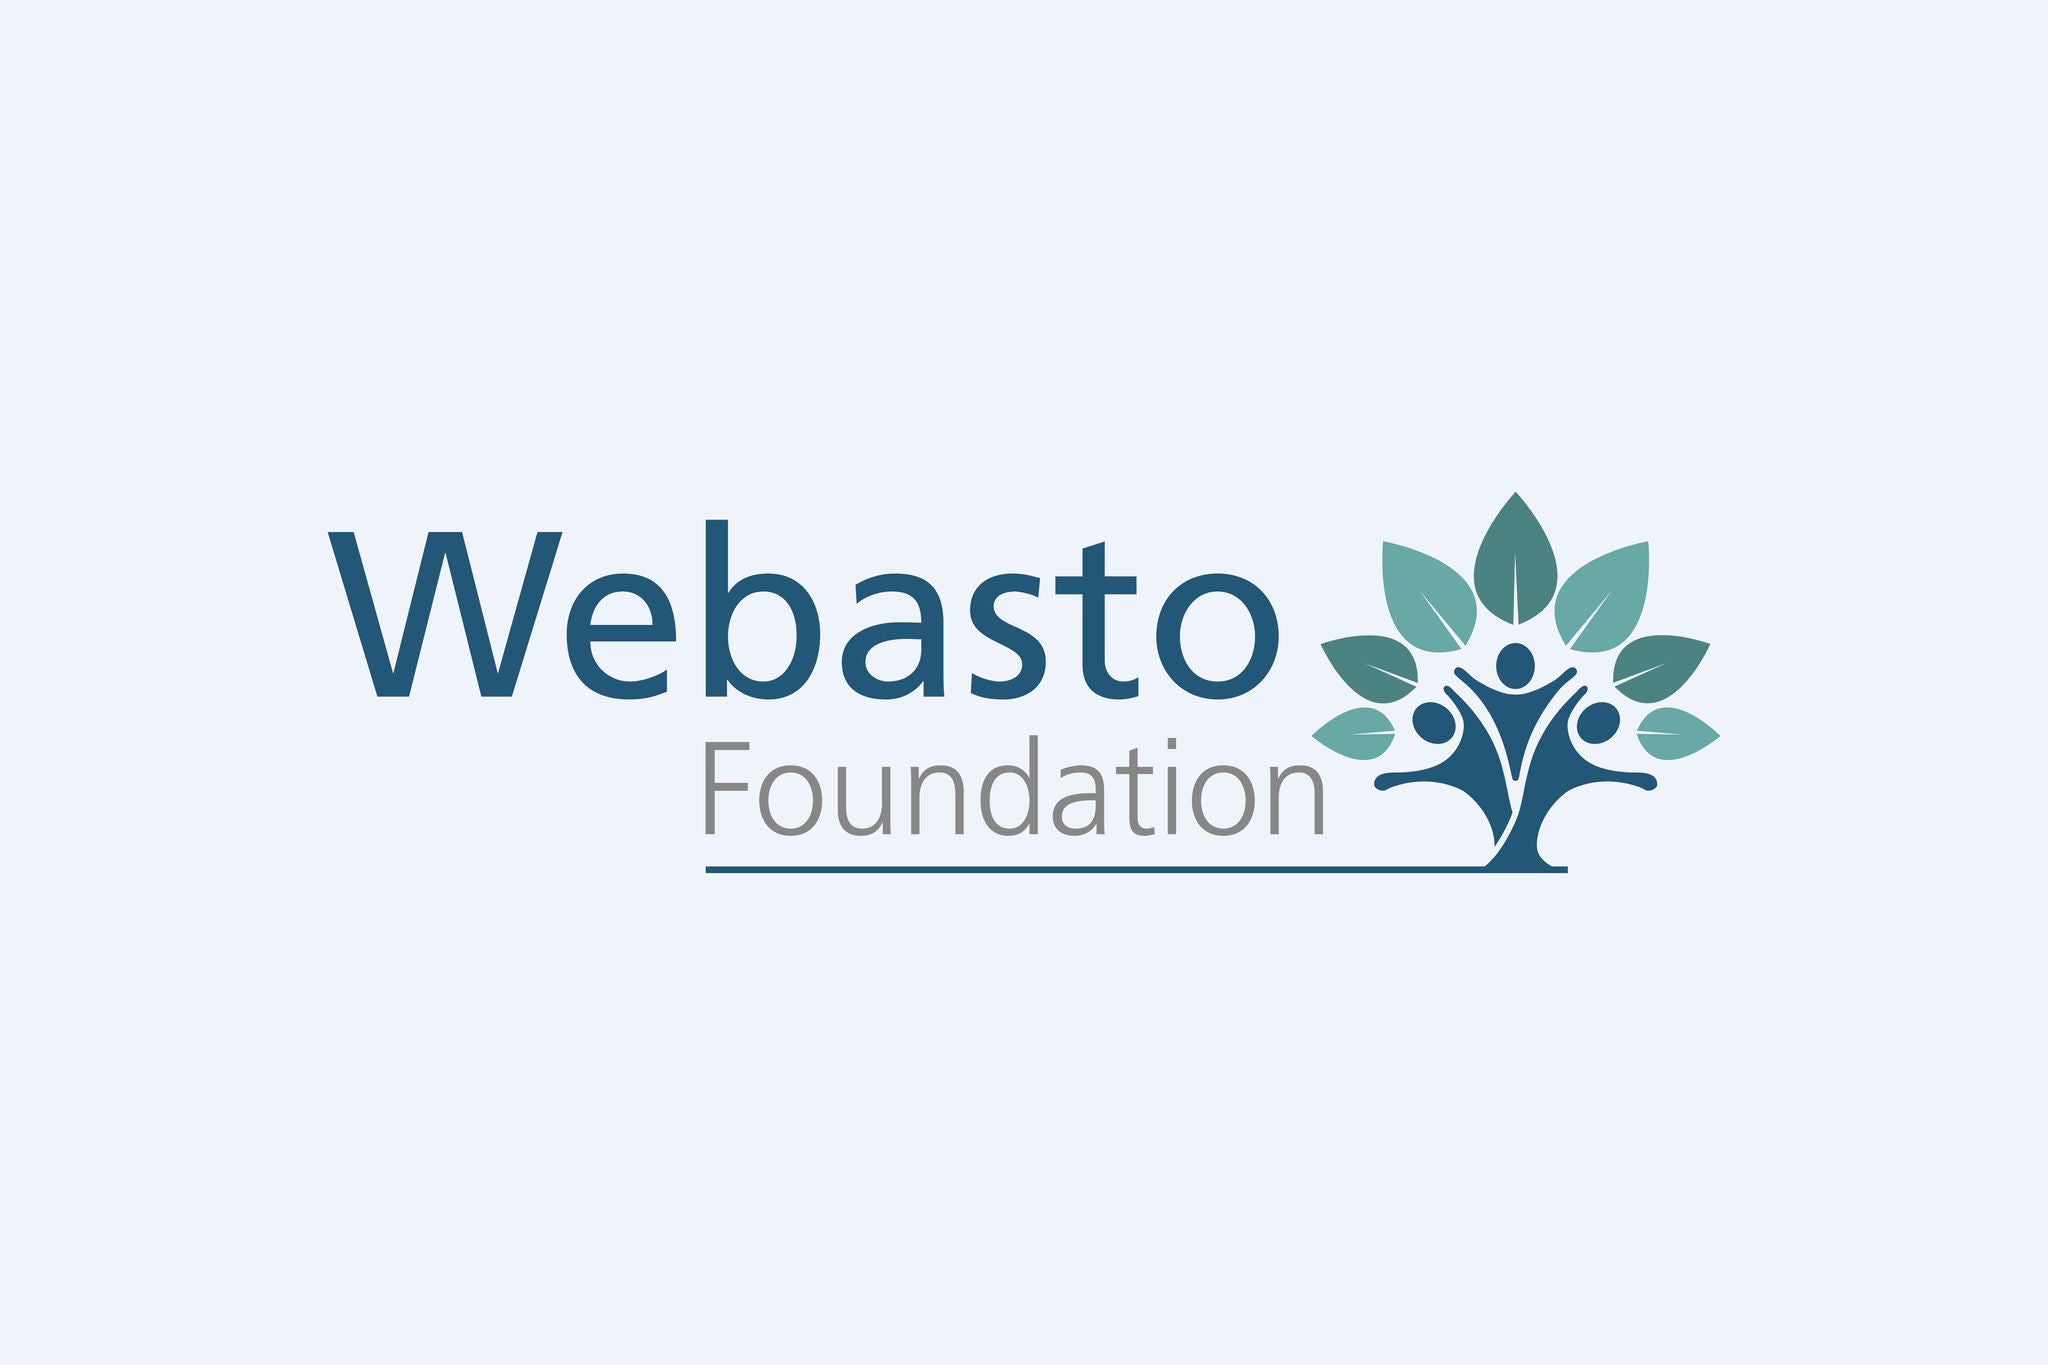 Webasto Stiftung - Gesellschaft & Engagement